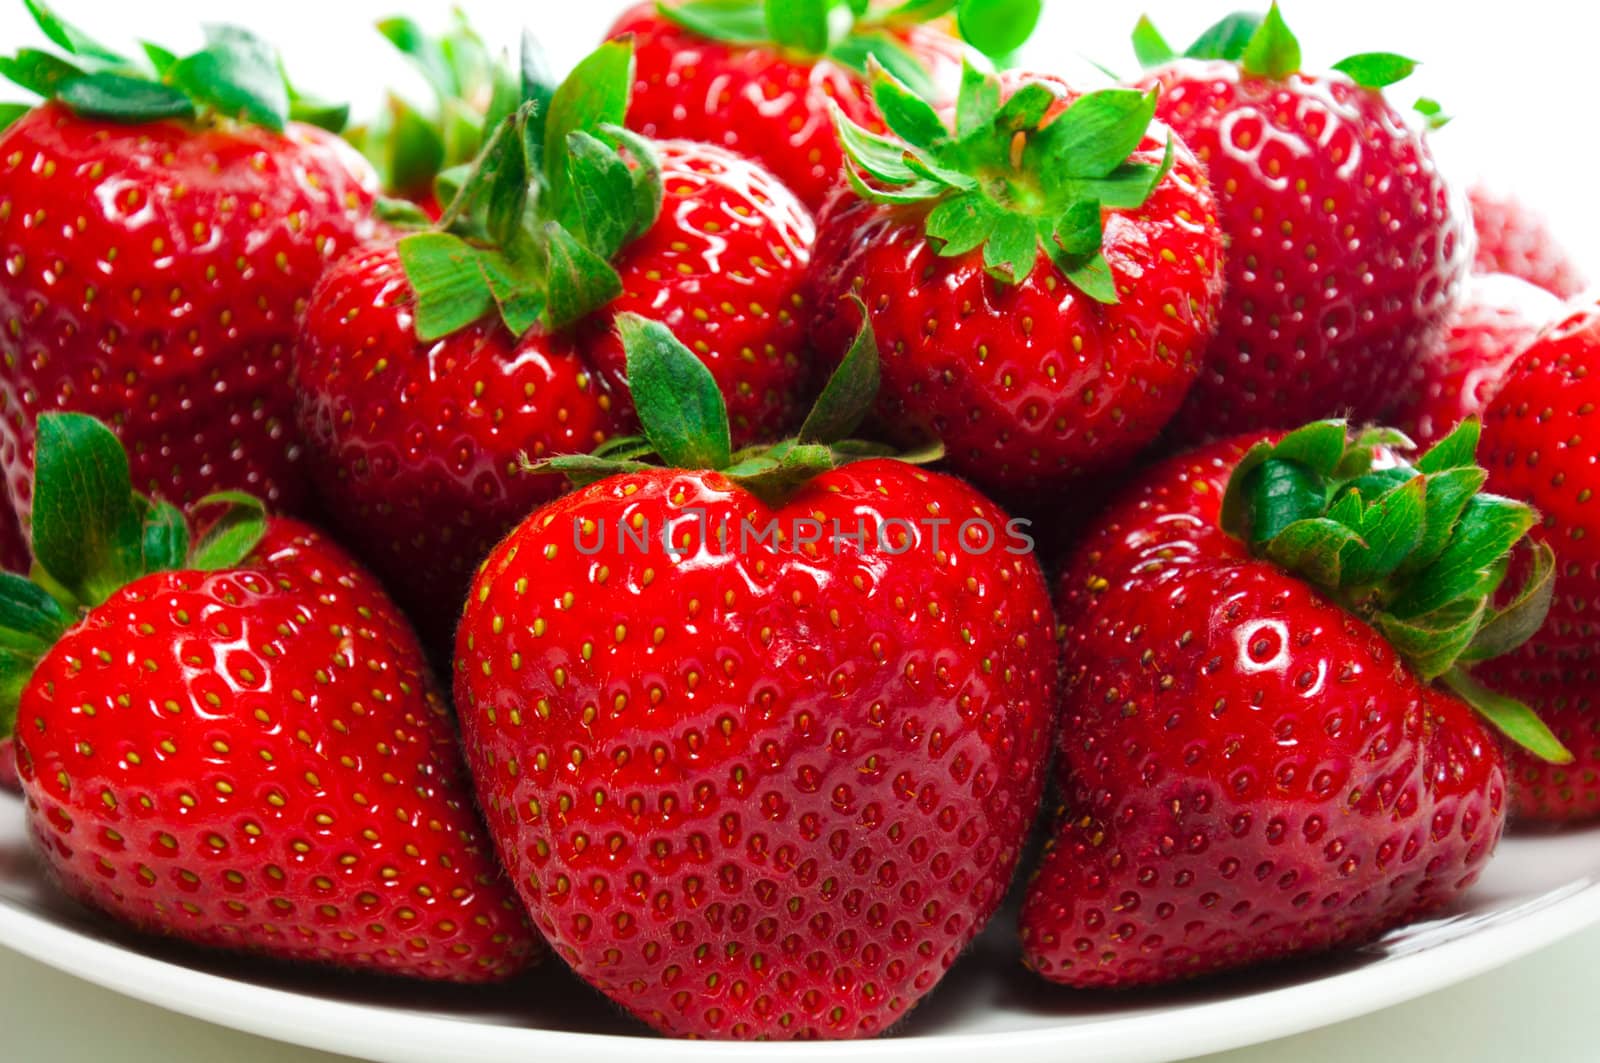 Strawberries on a plate by lobzik